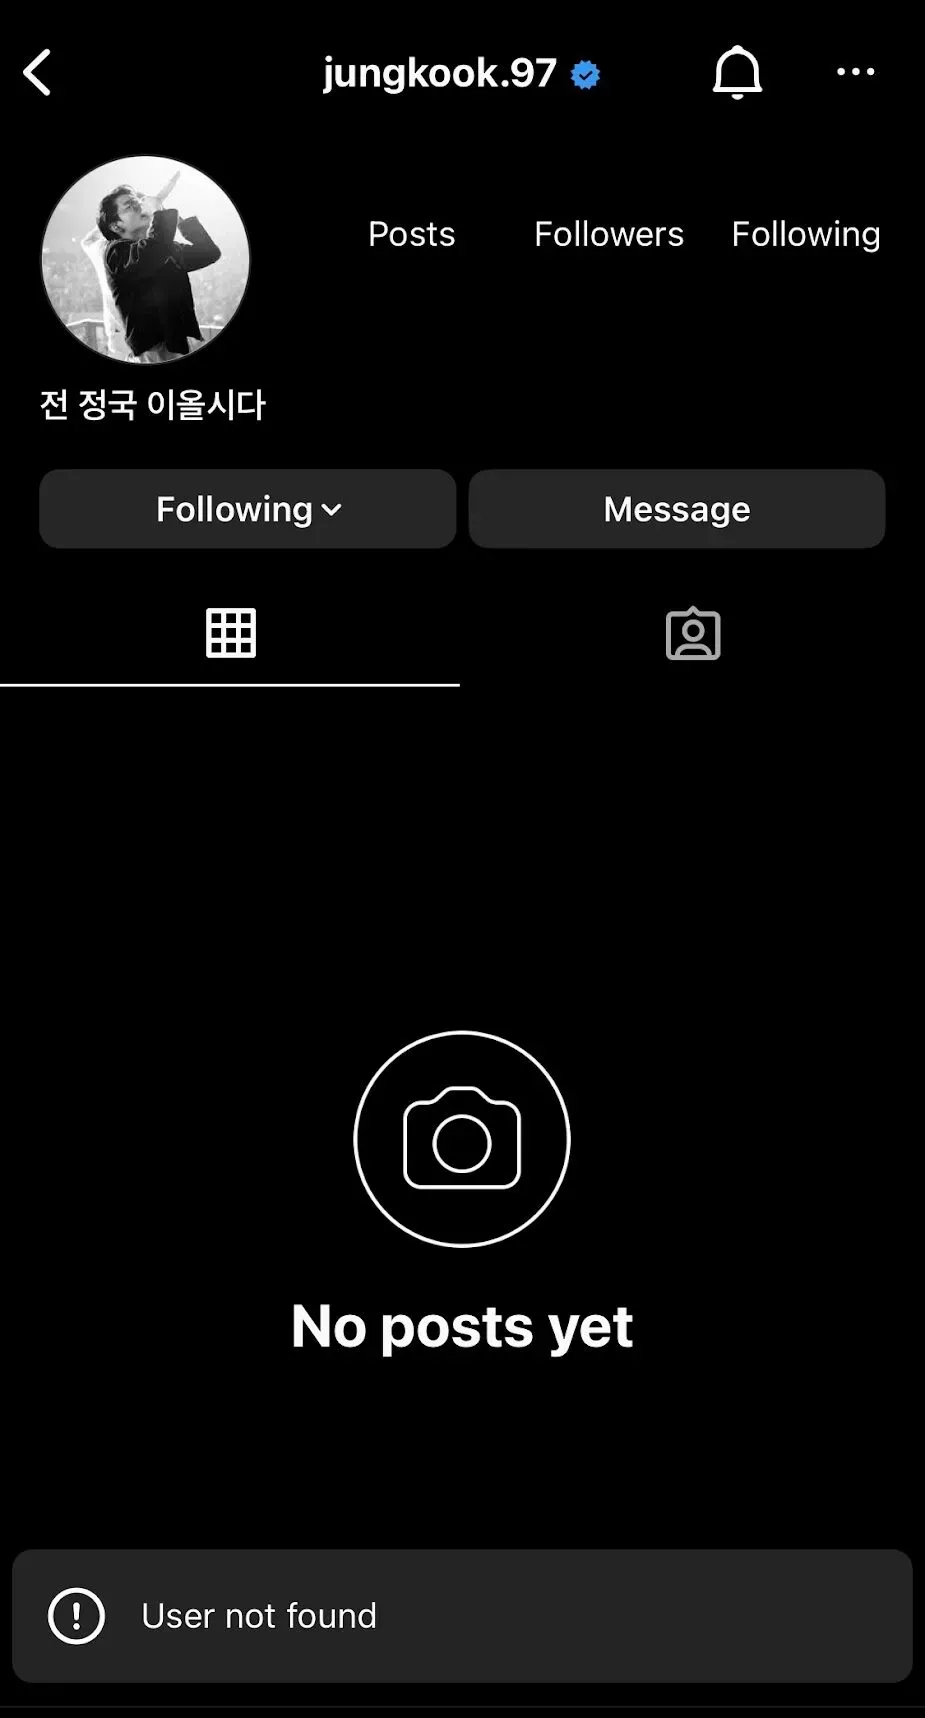 bts jungkook instagram account